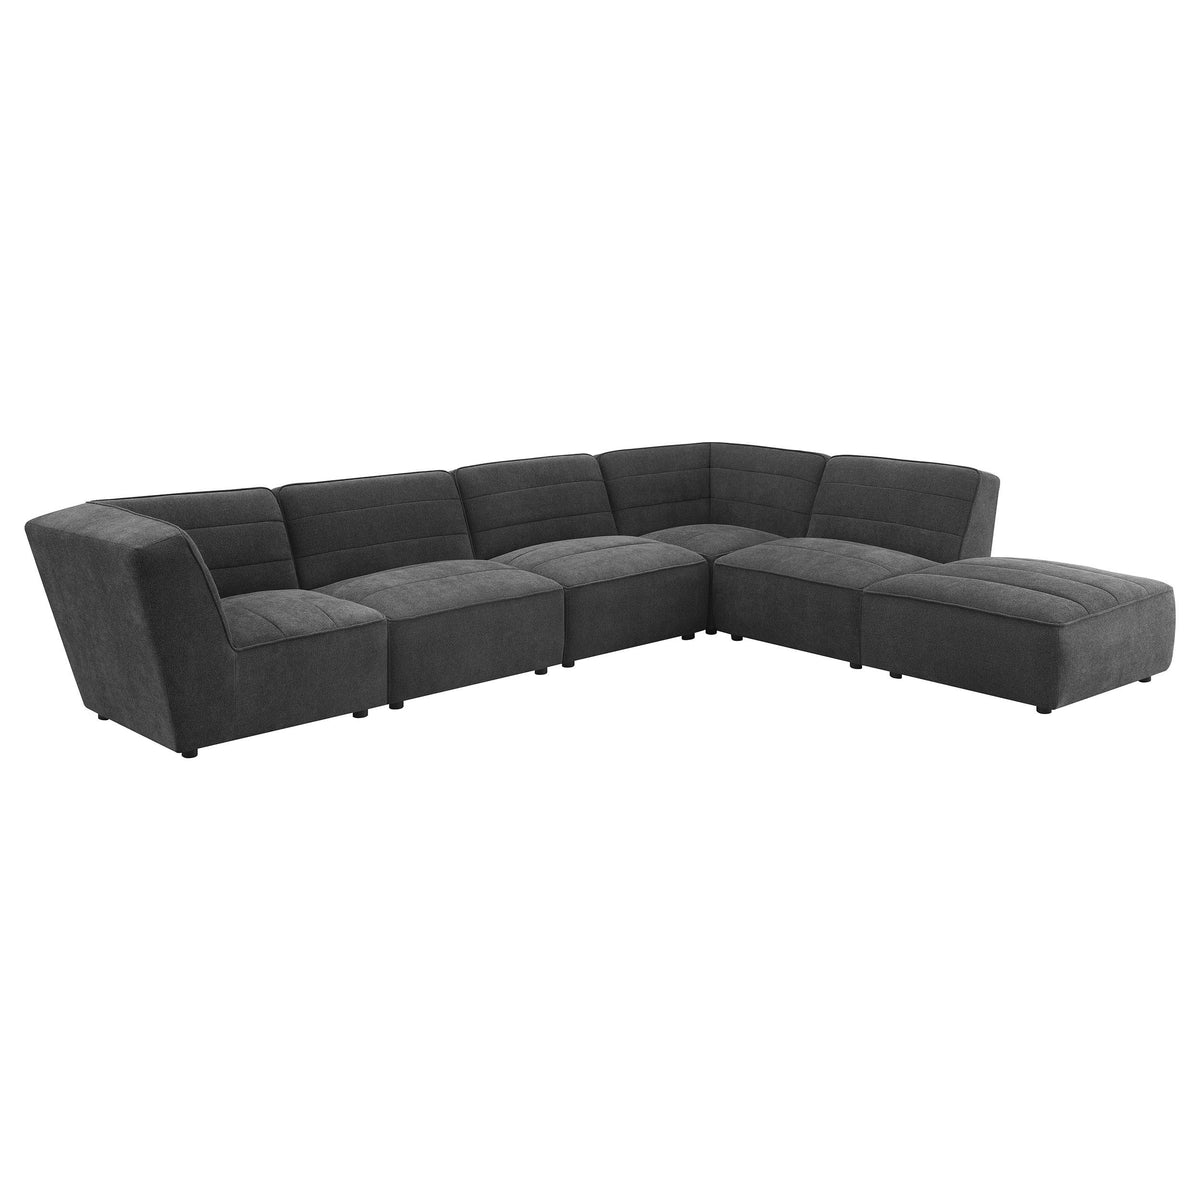 Sunny Upholstered 6-piece Modular Sectional Dark Charcoal Sunny Upholstered 6-piece Modular Sectional Dark Charcoal Half Price Furniture